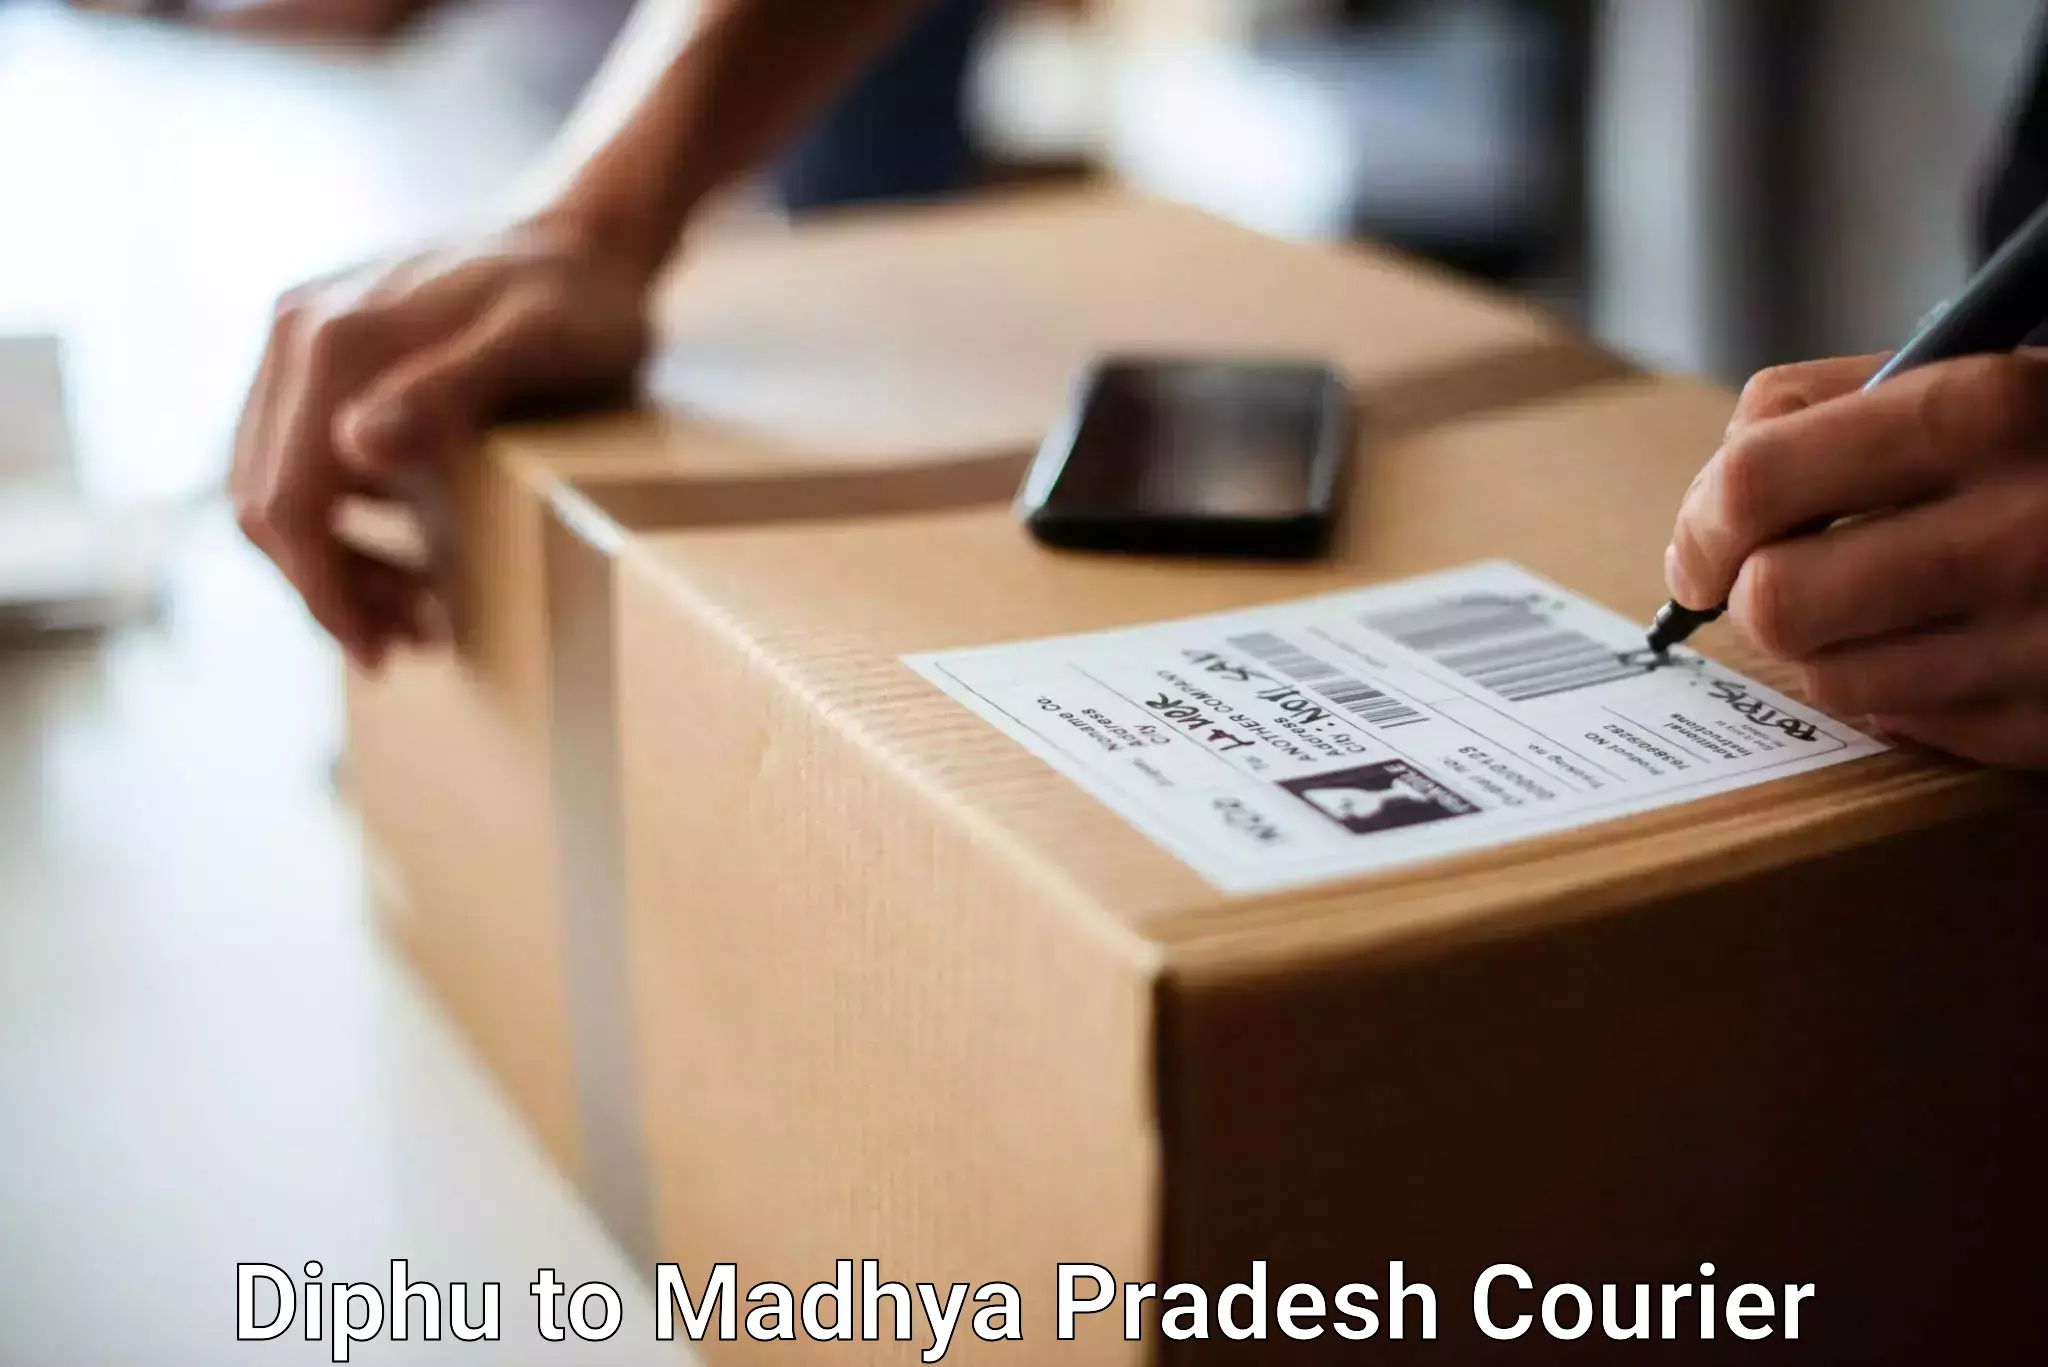 Luggage delivery app Diphu to Madhya Pradesh